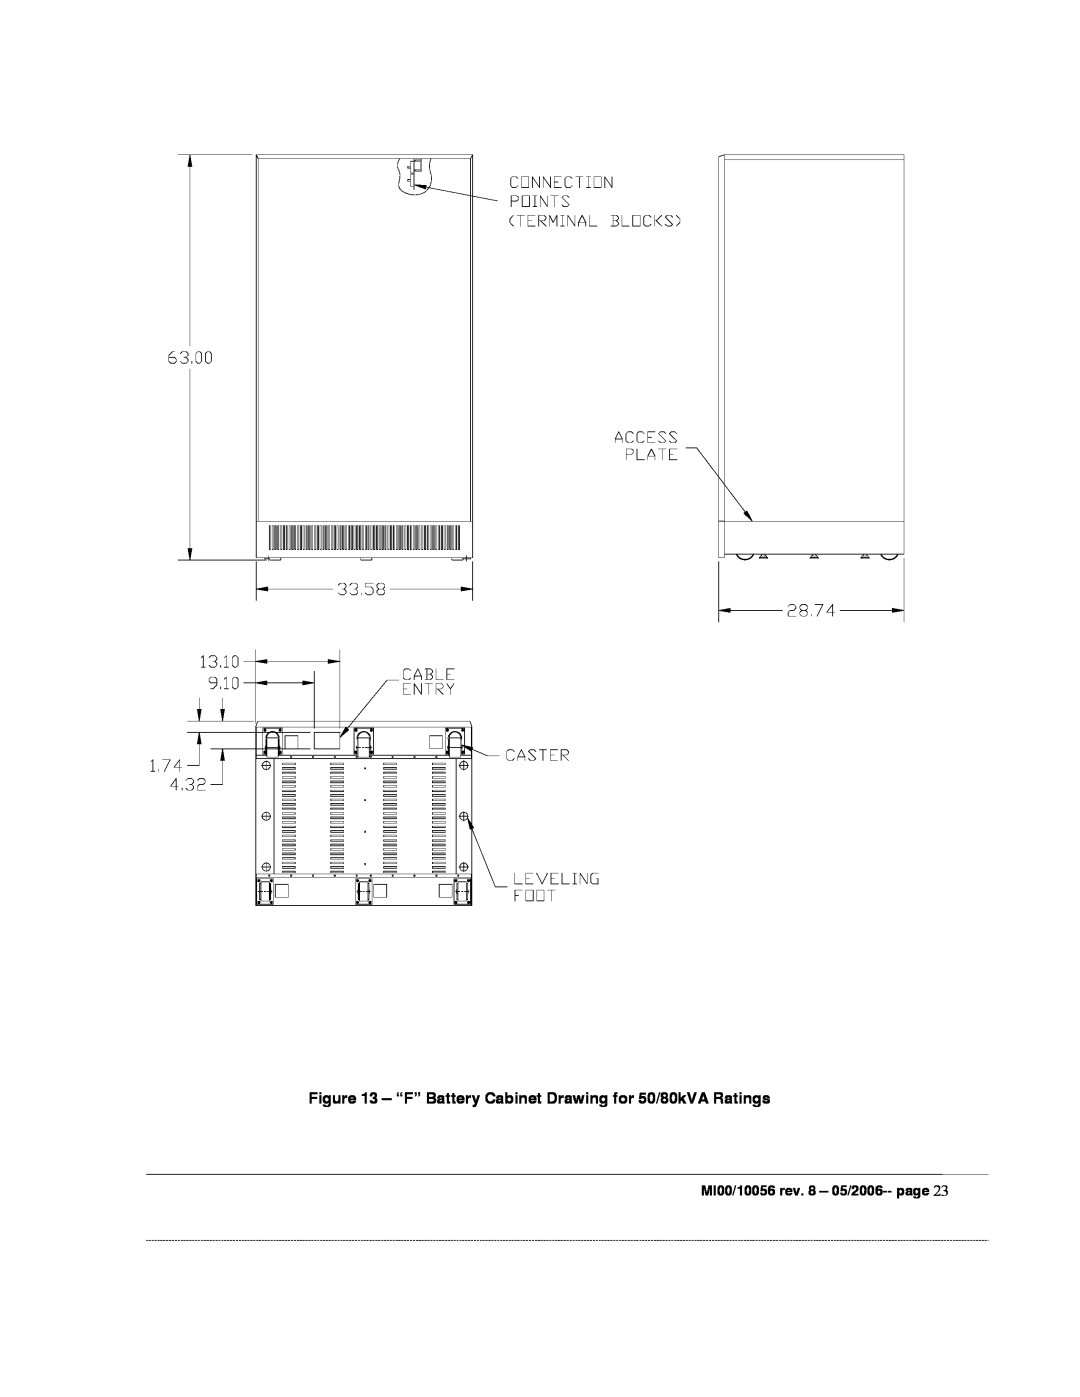 Garmin EDP70 manual “F” Battery Cabinet Drawing for 50/80kVA Ratings, MI00/10056 rev. 8 - 05/2006-- page 